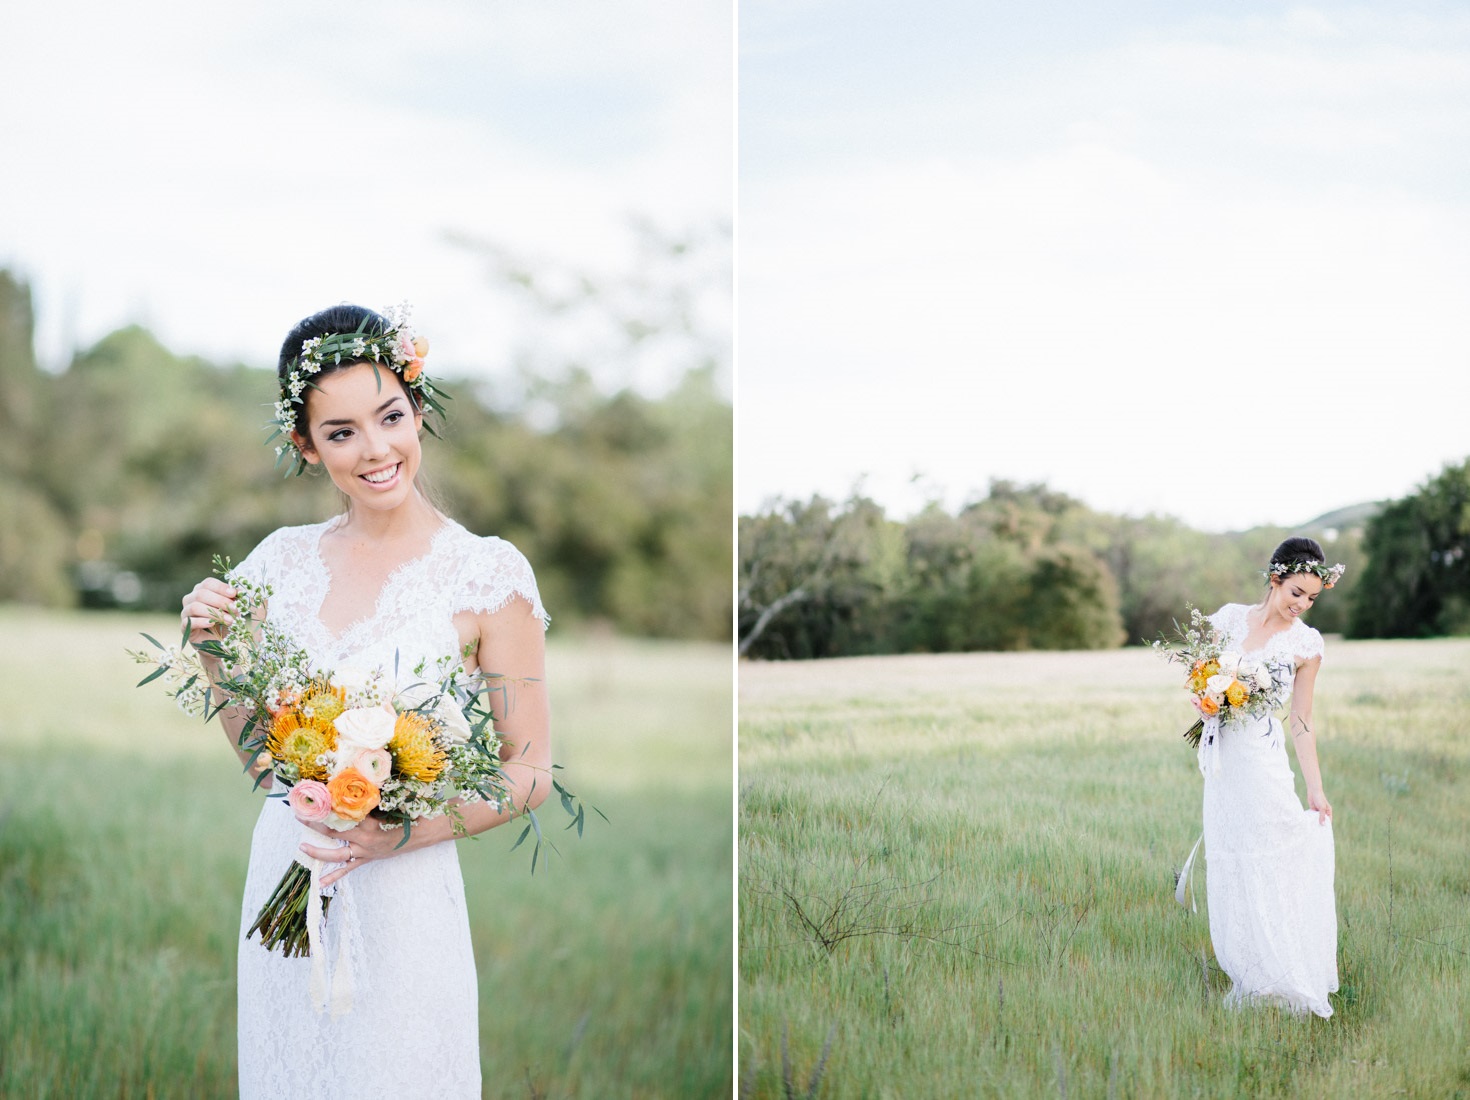 Lace Wedding Dress - "Fields of Love" Summer Wedding Inspiration